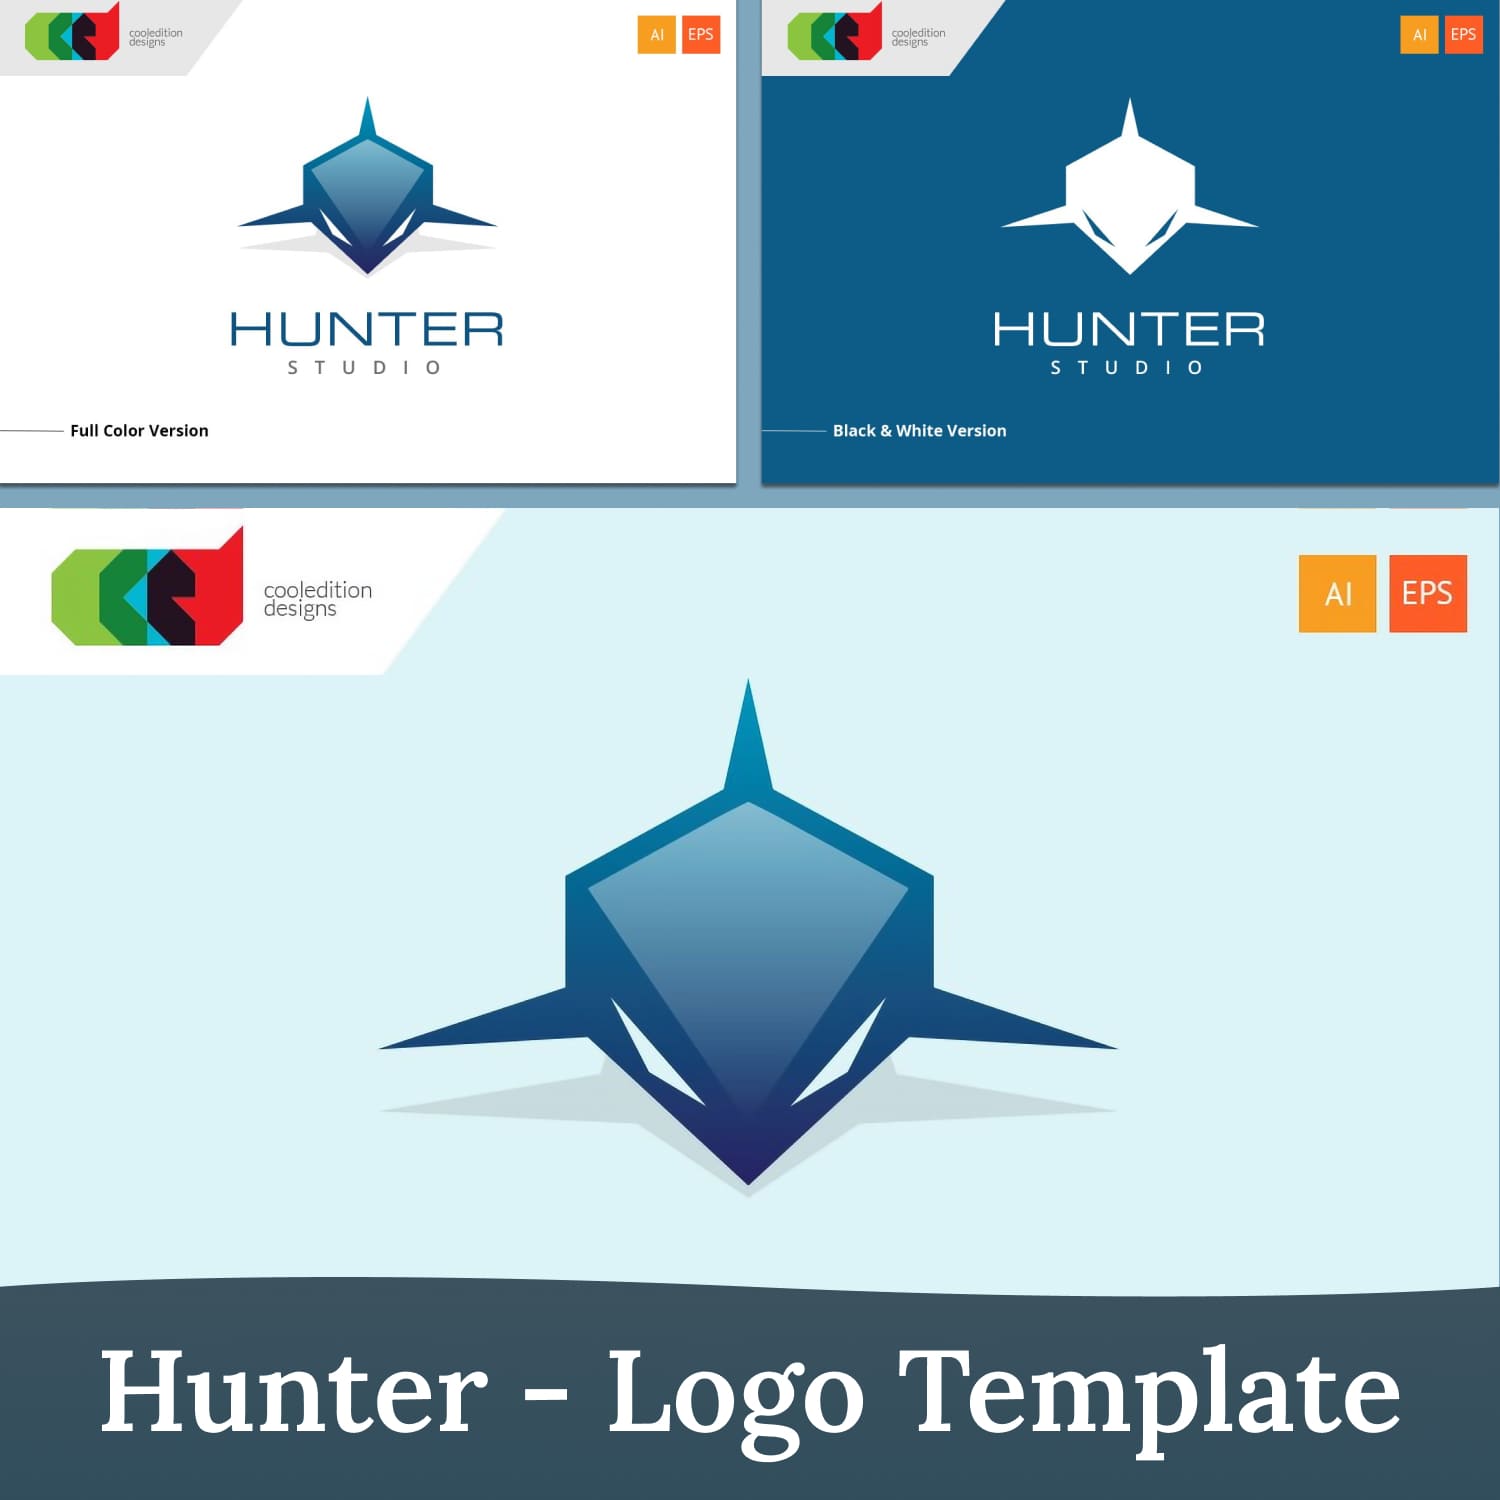 Hunter logo template - main image preview.